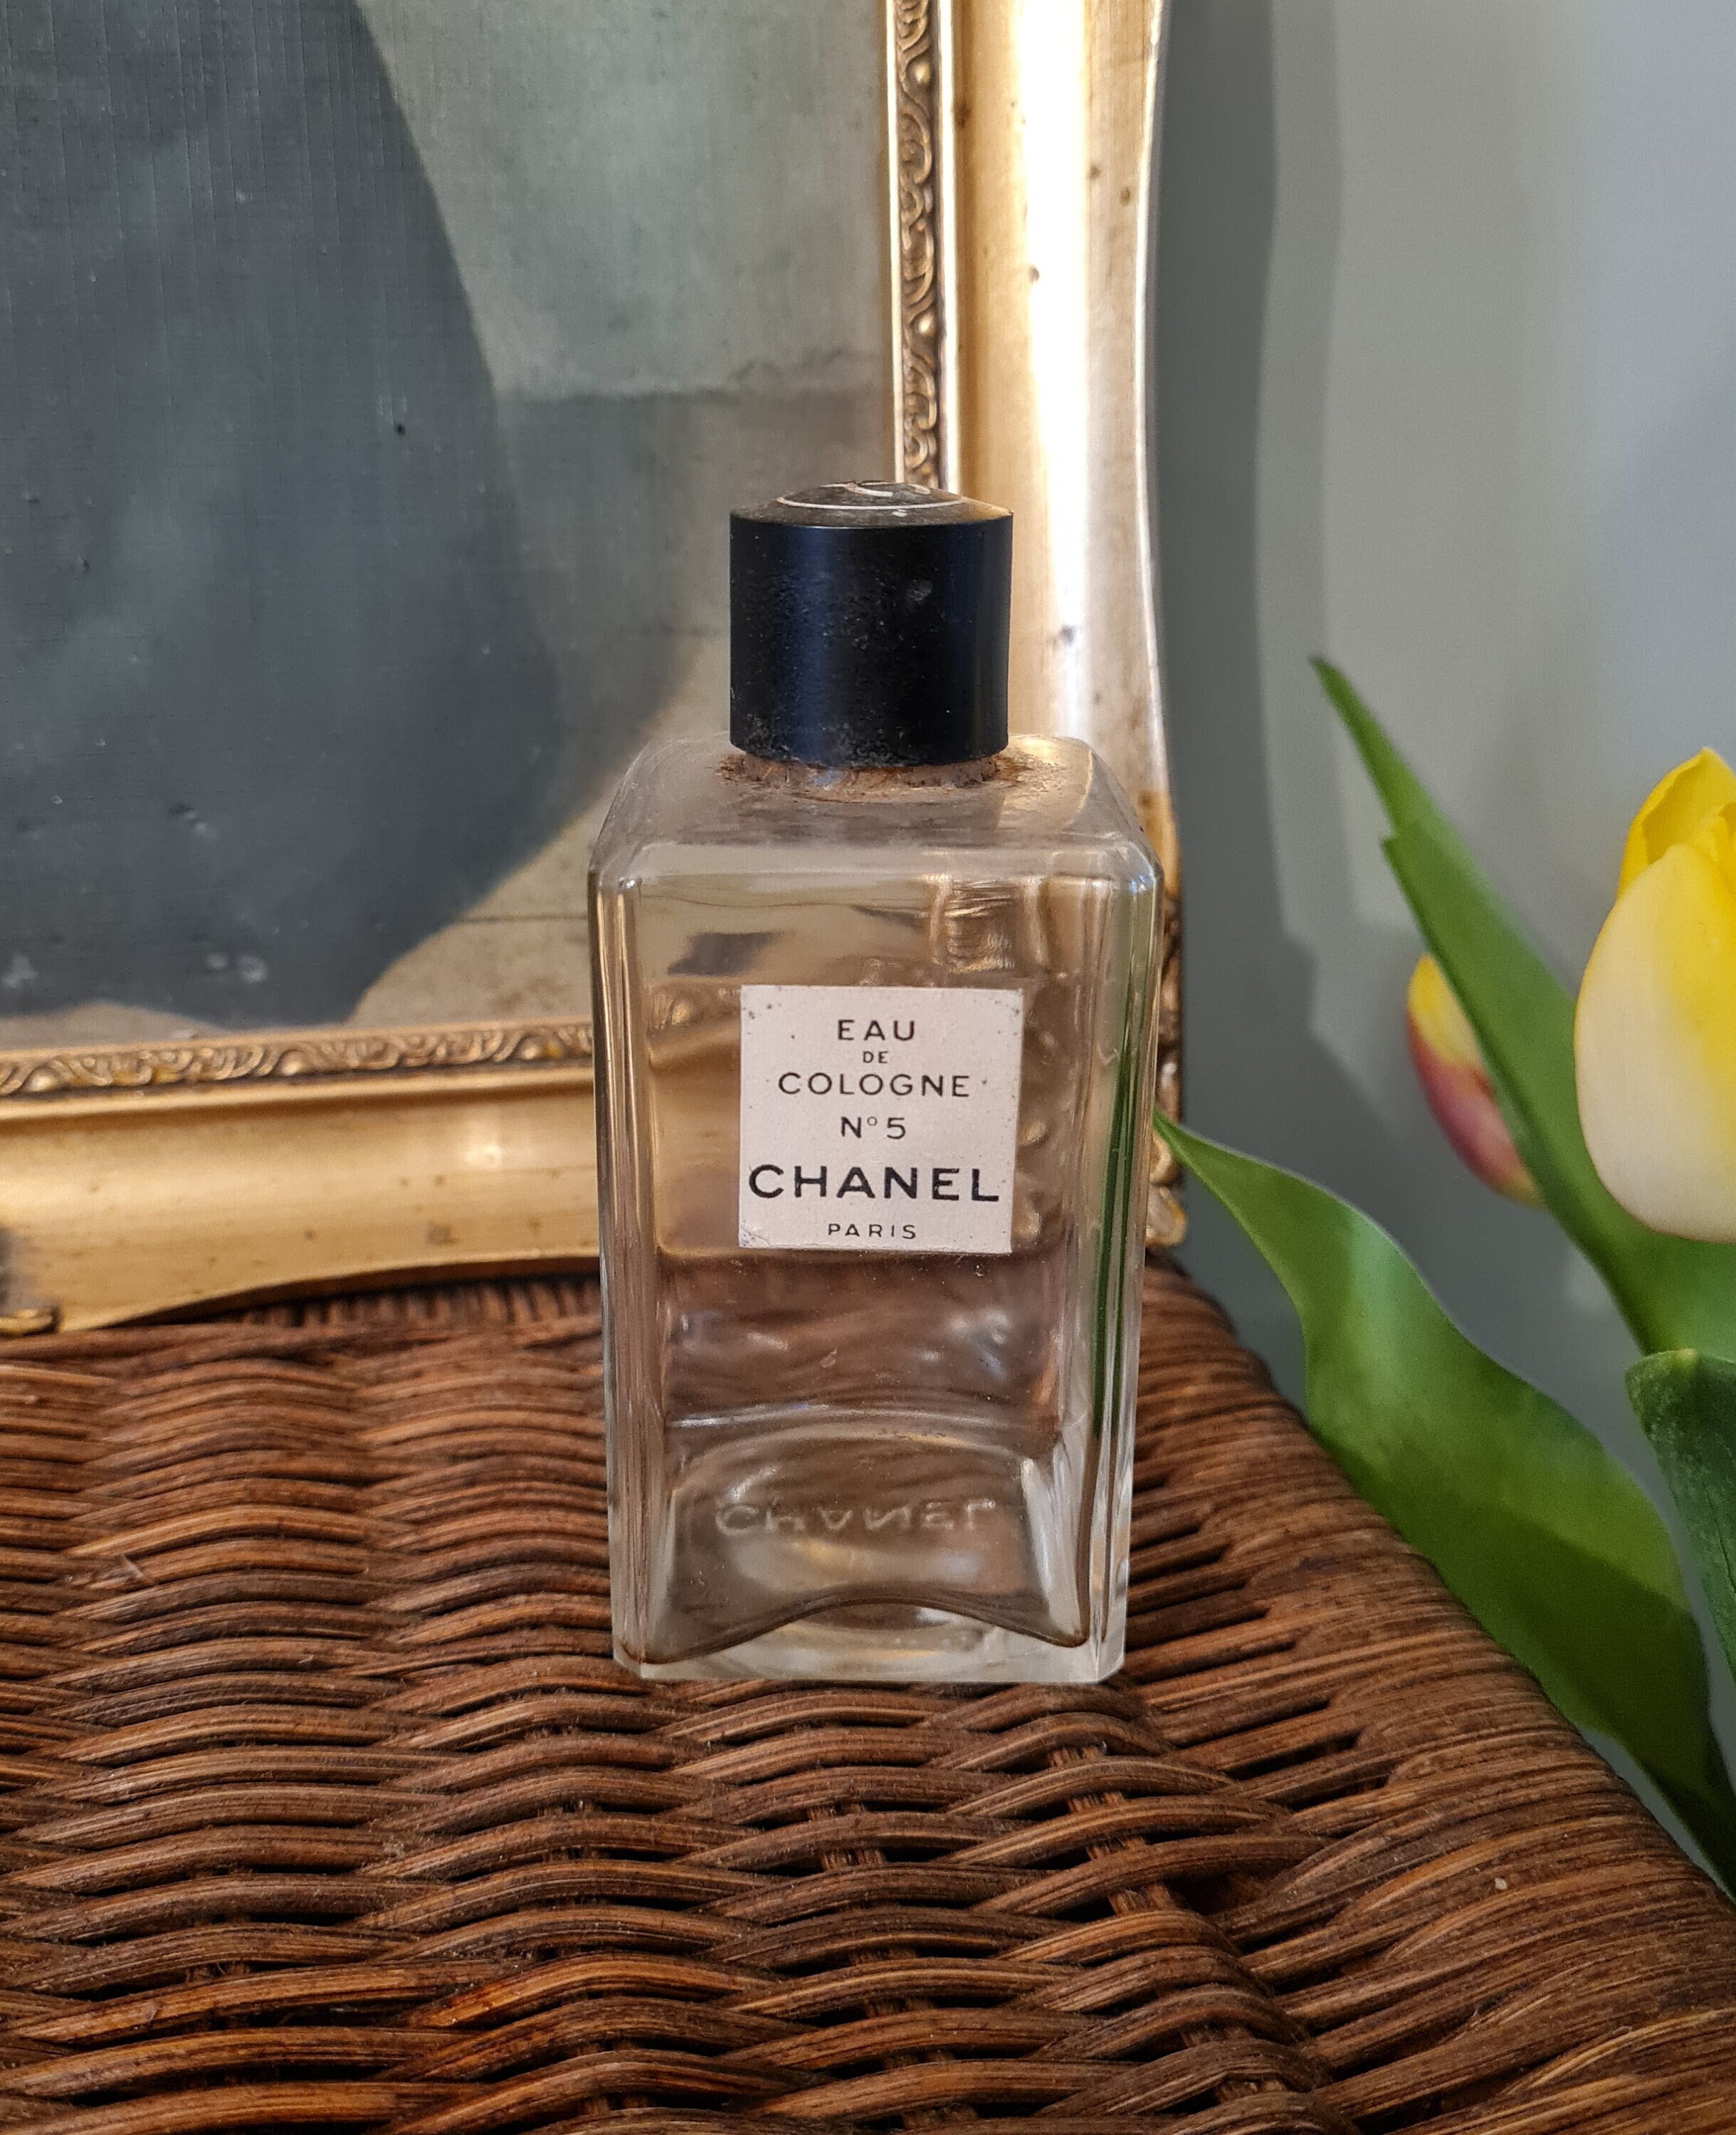 Coco Chanel Perfume Bottle Print – Blim & Blum UK